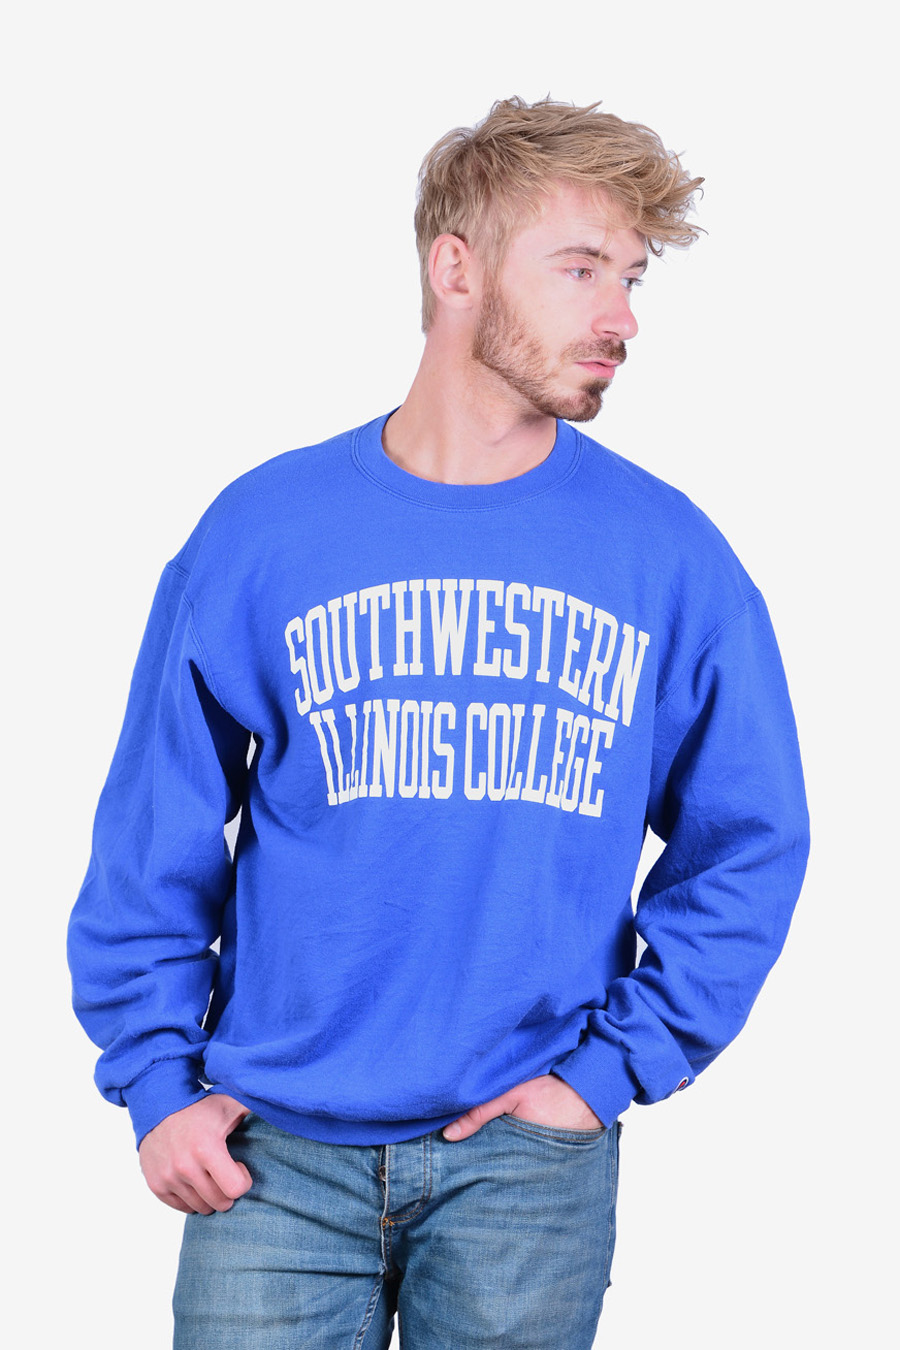 Vintage college sweatshirt